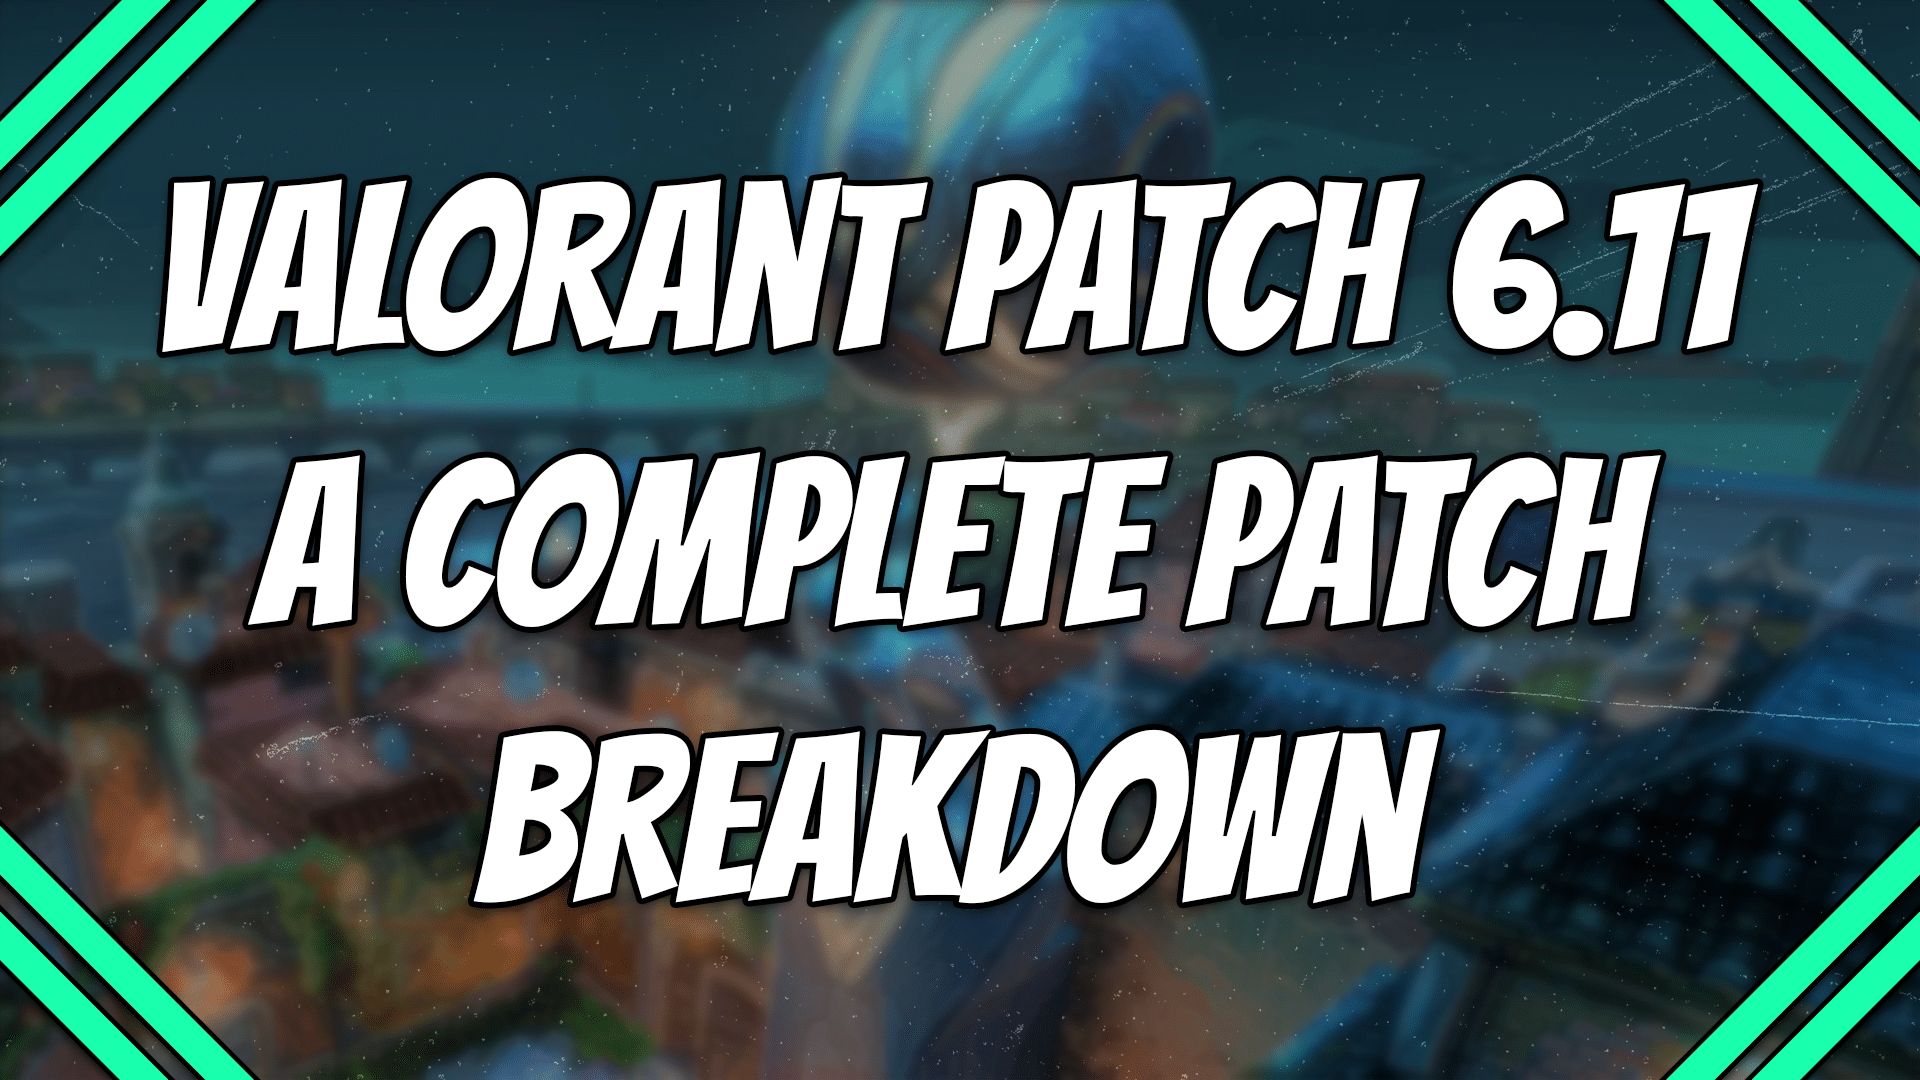 Valorant patch 6.11 title card